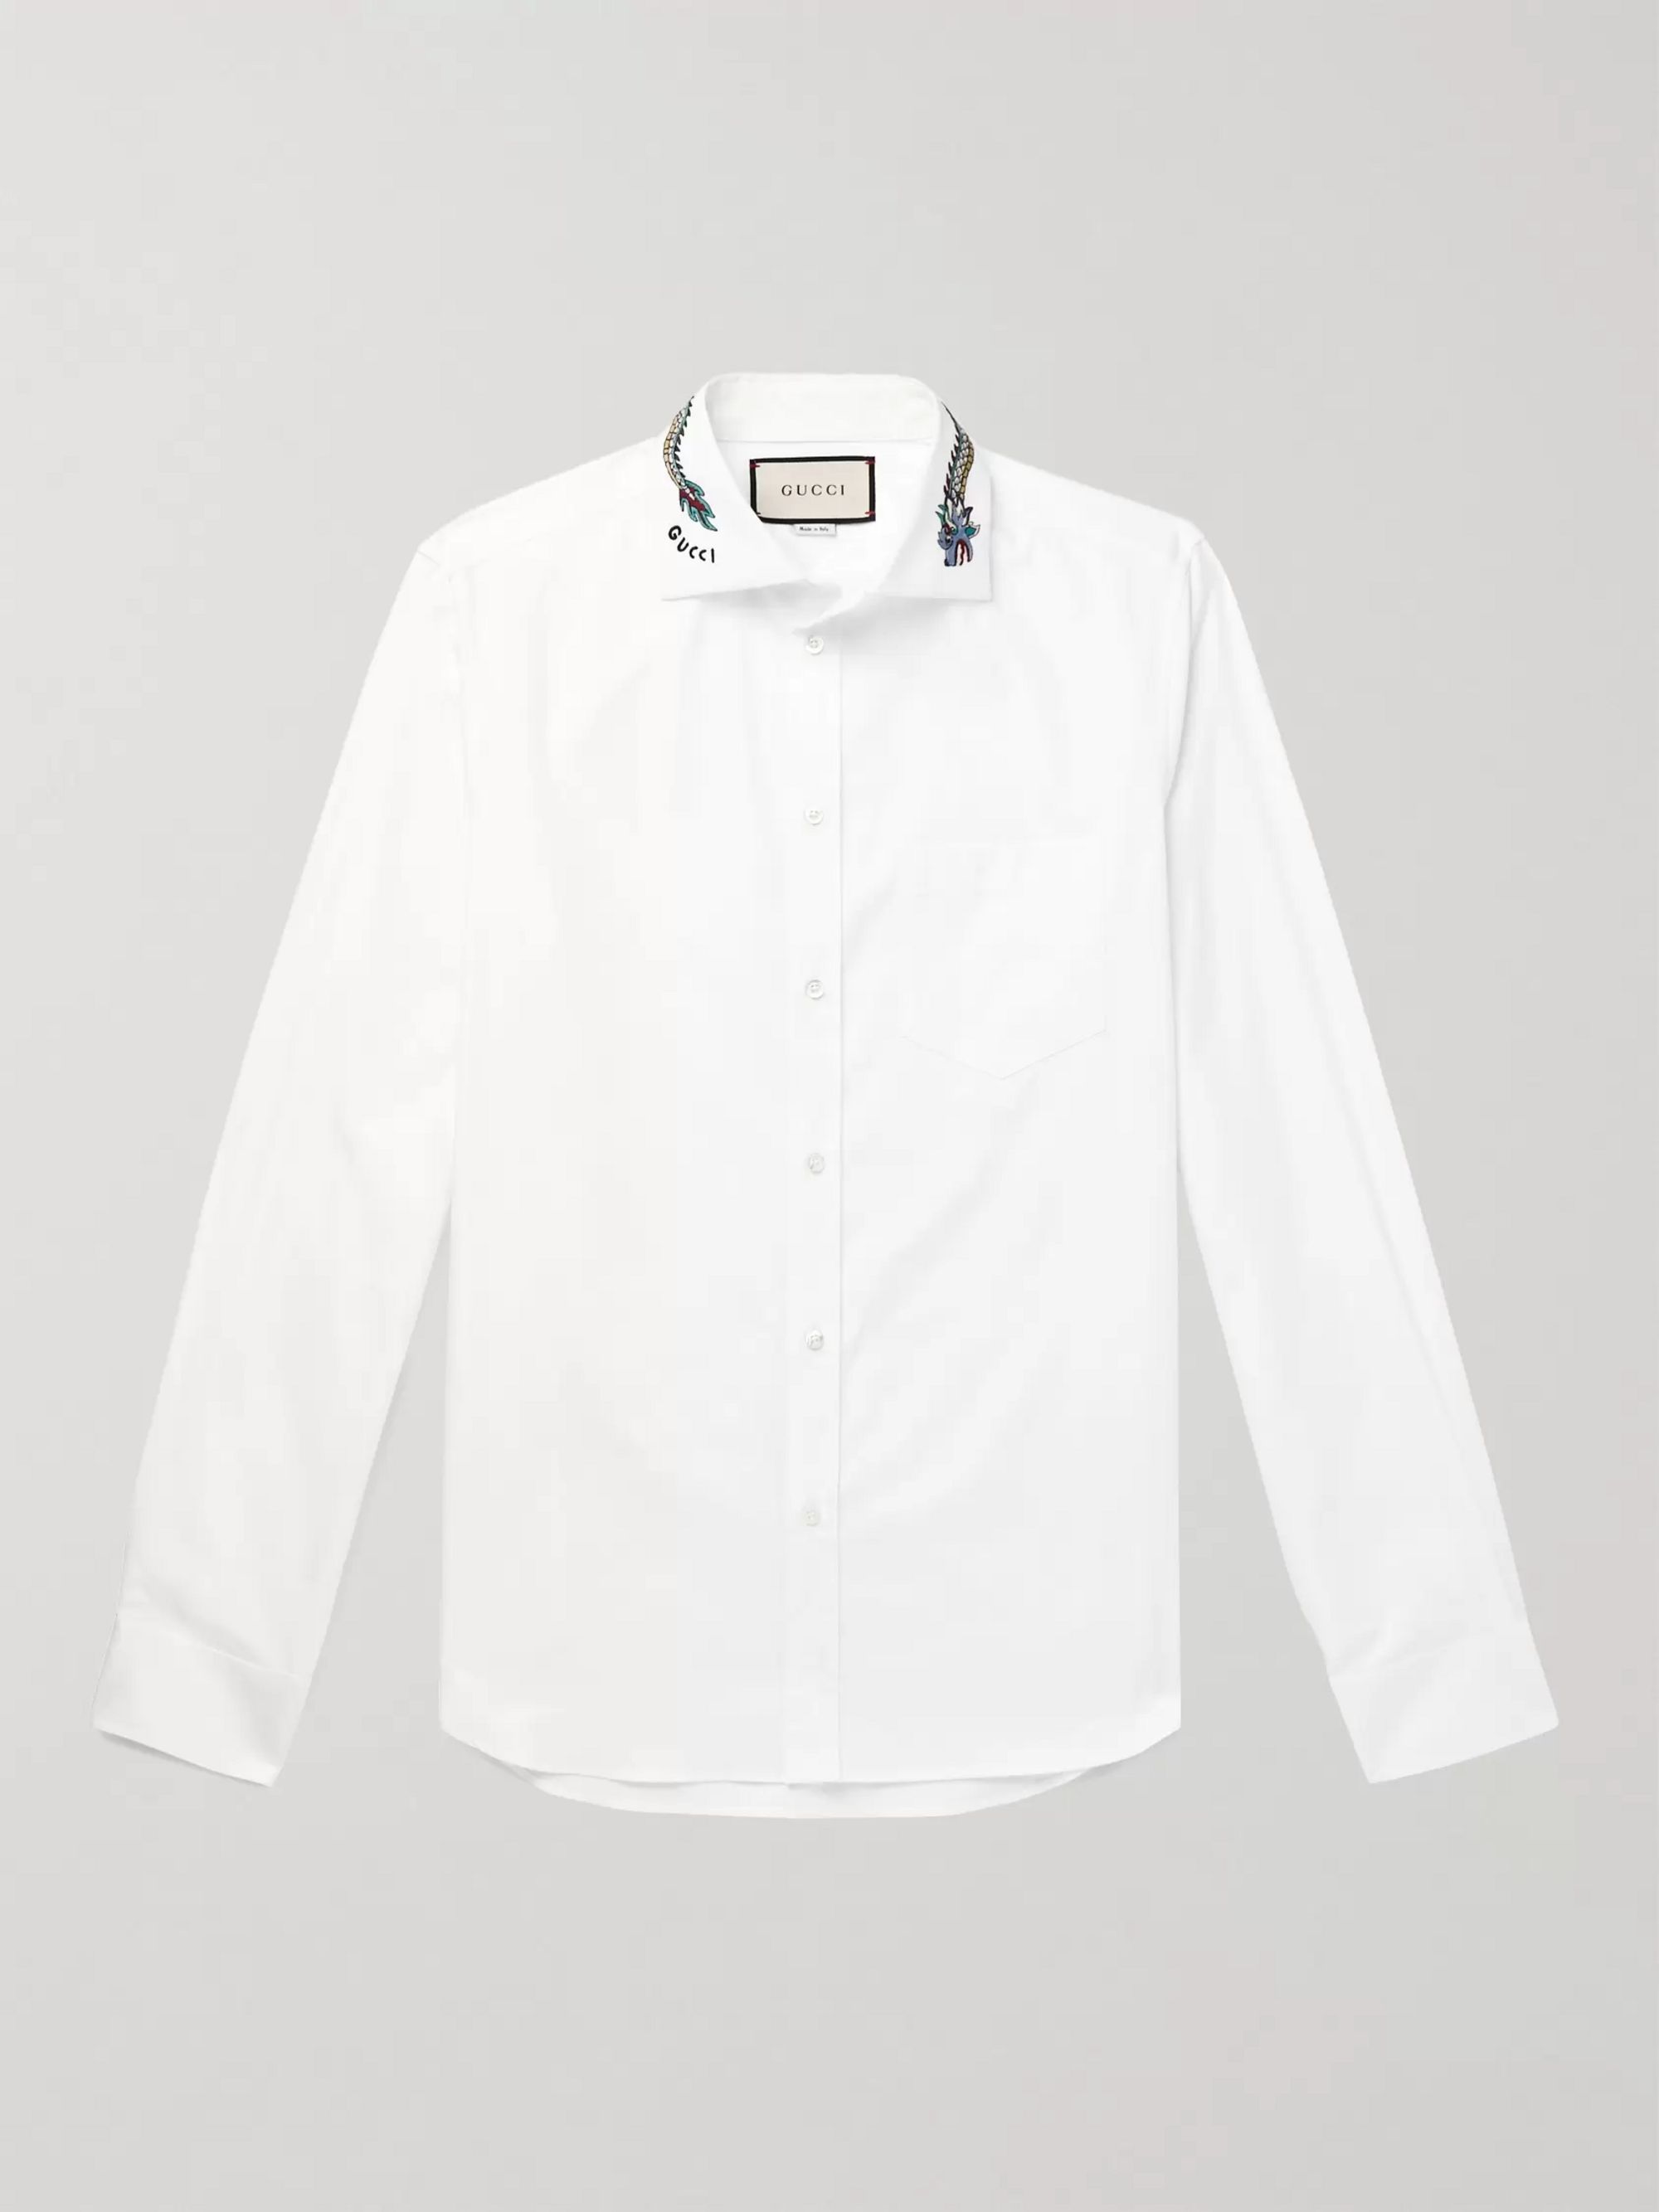 white gucci shirt